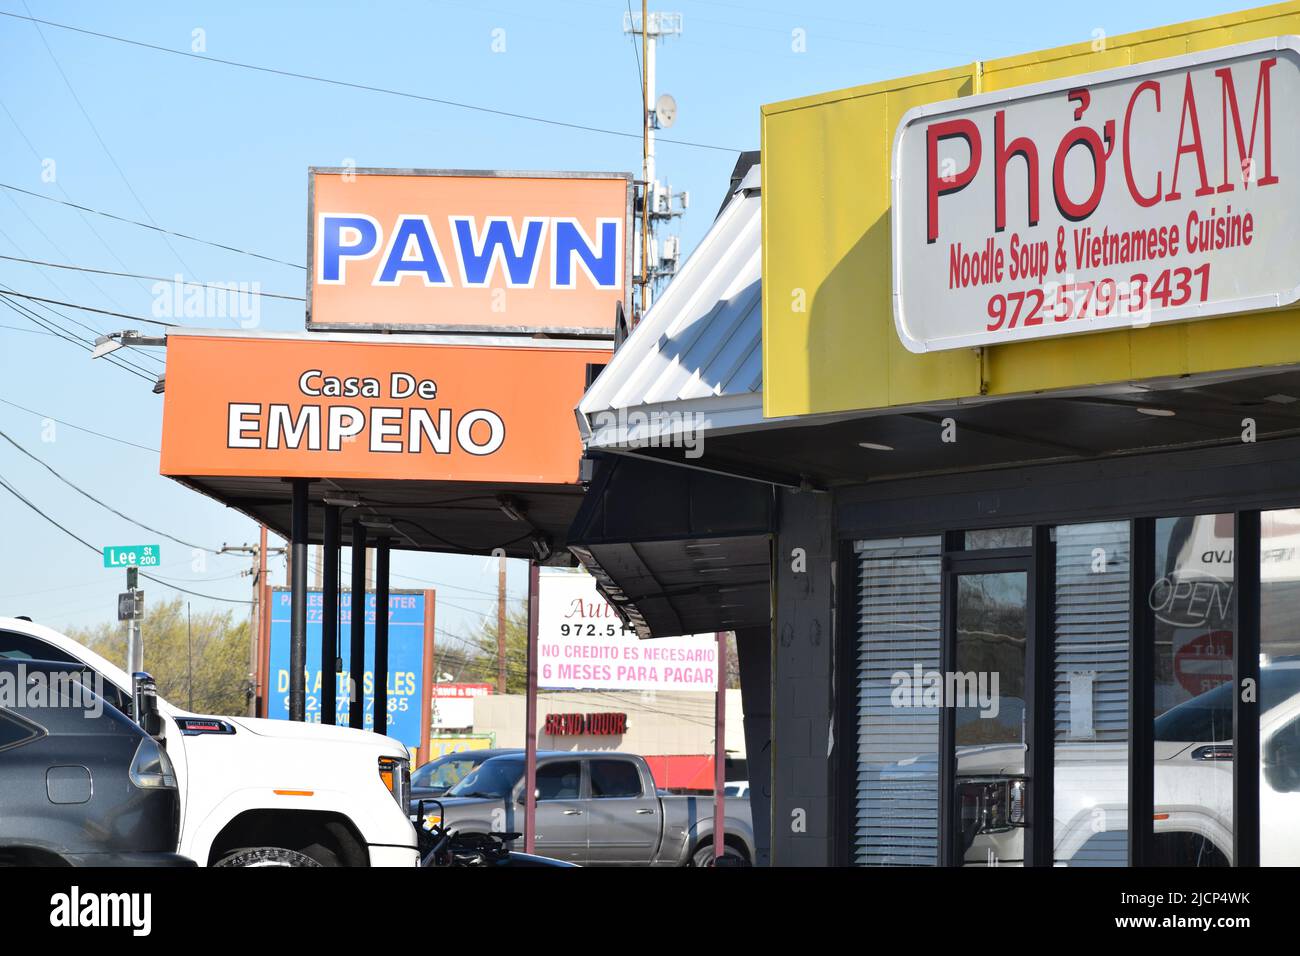 Signs for a Pho Cam Vietnamese restaurant, a pawn shop and Casa De Empeno in Irving, Texas Stock Photo